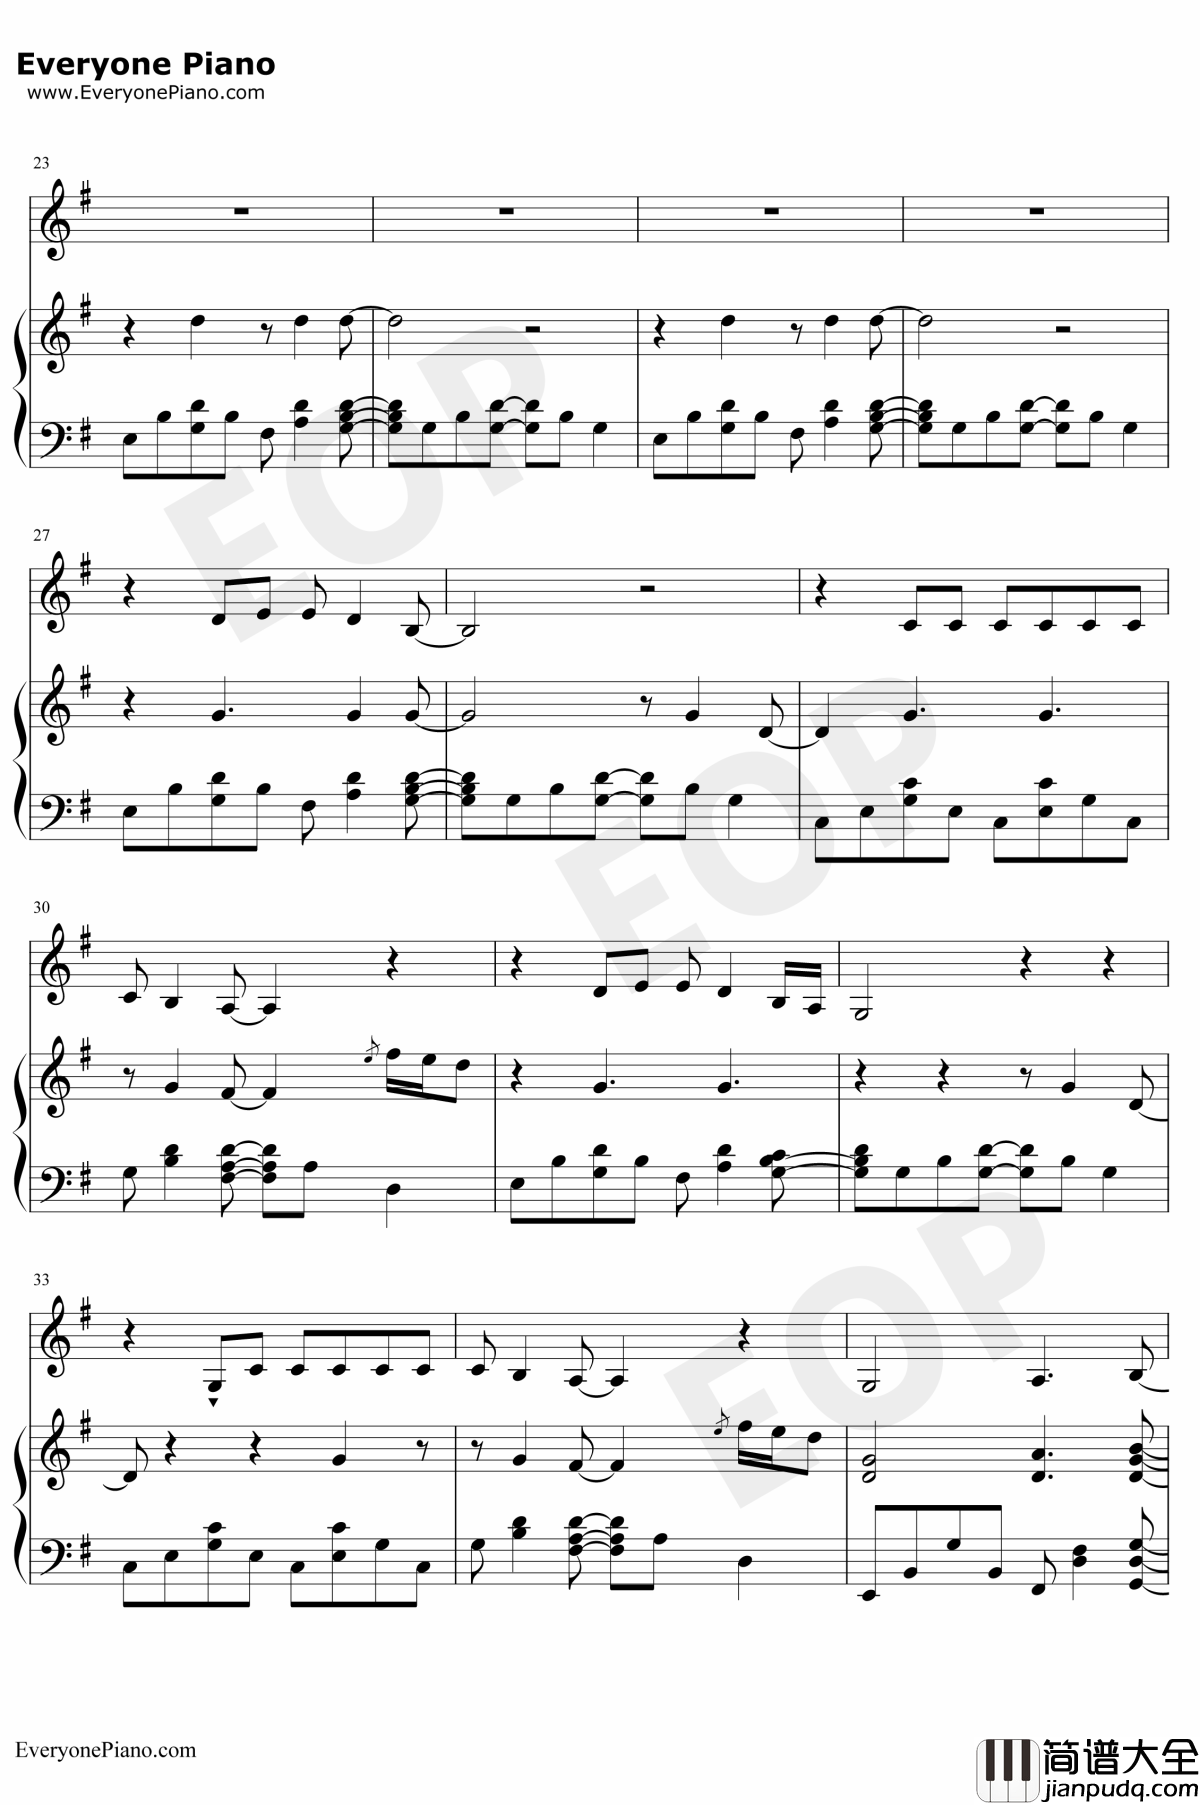 Shallow钢琴谱_LadyGagaBradleyCooper_一个明星的诞生OST